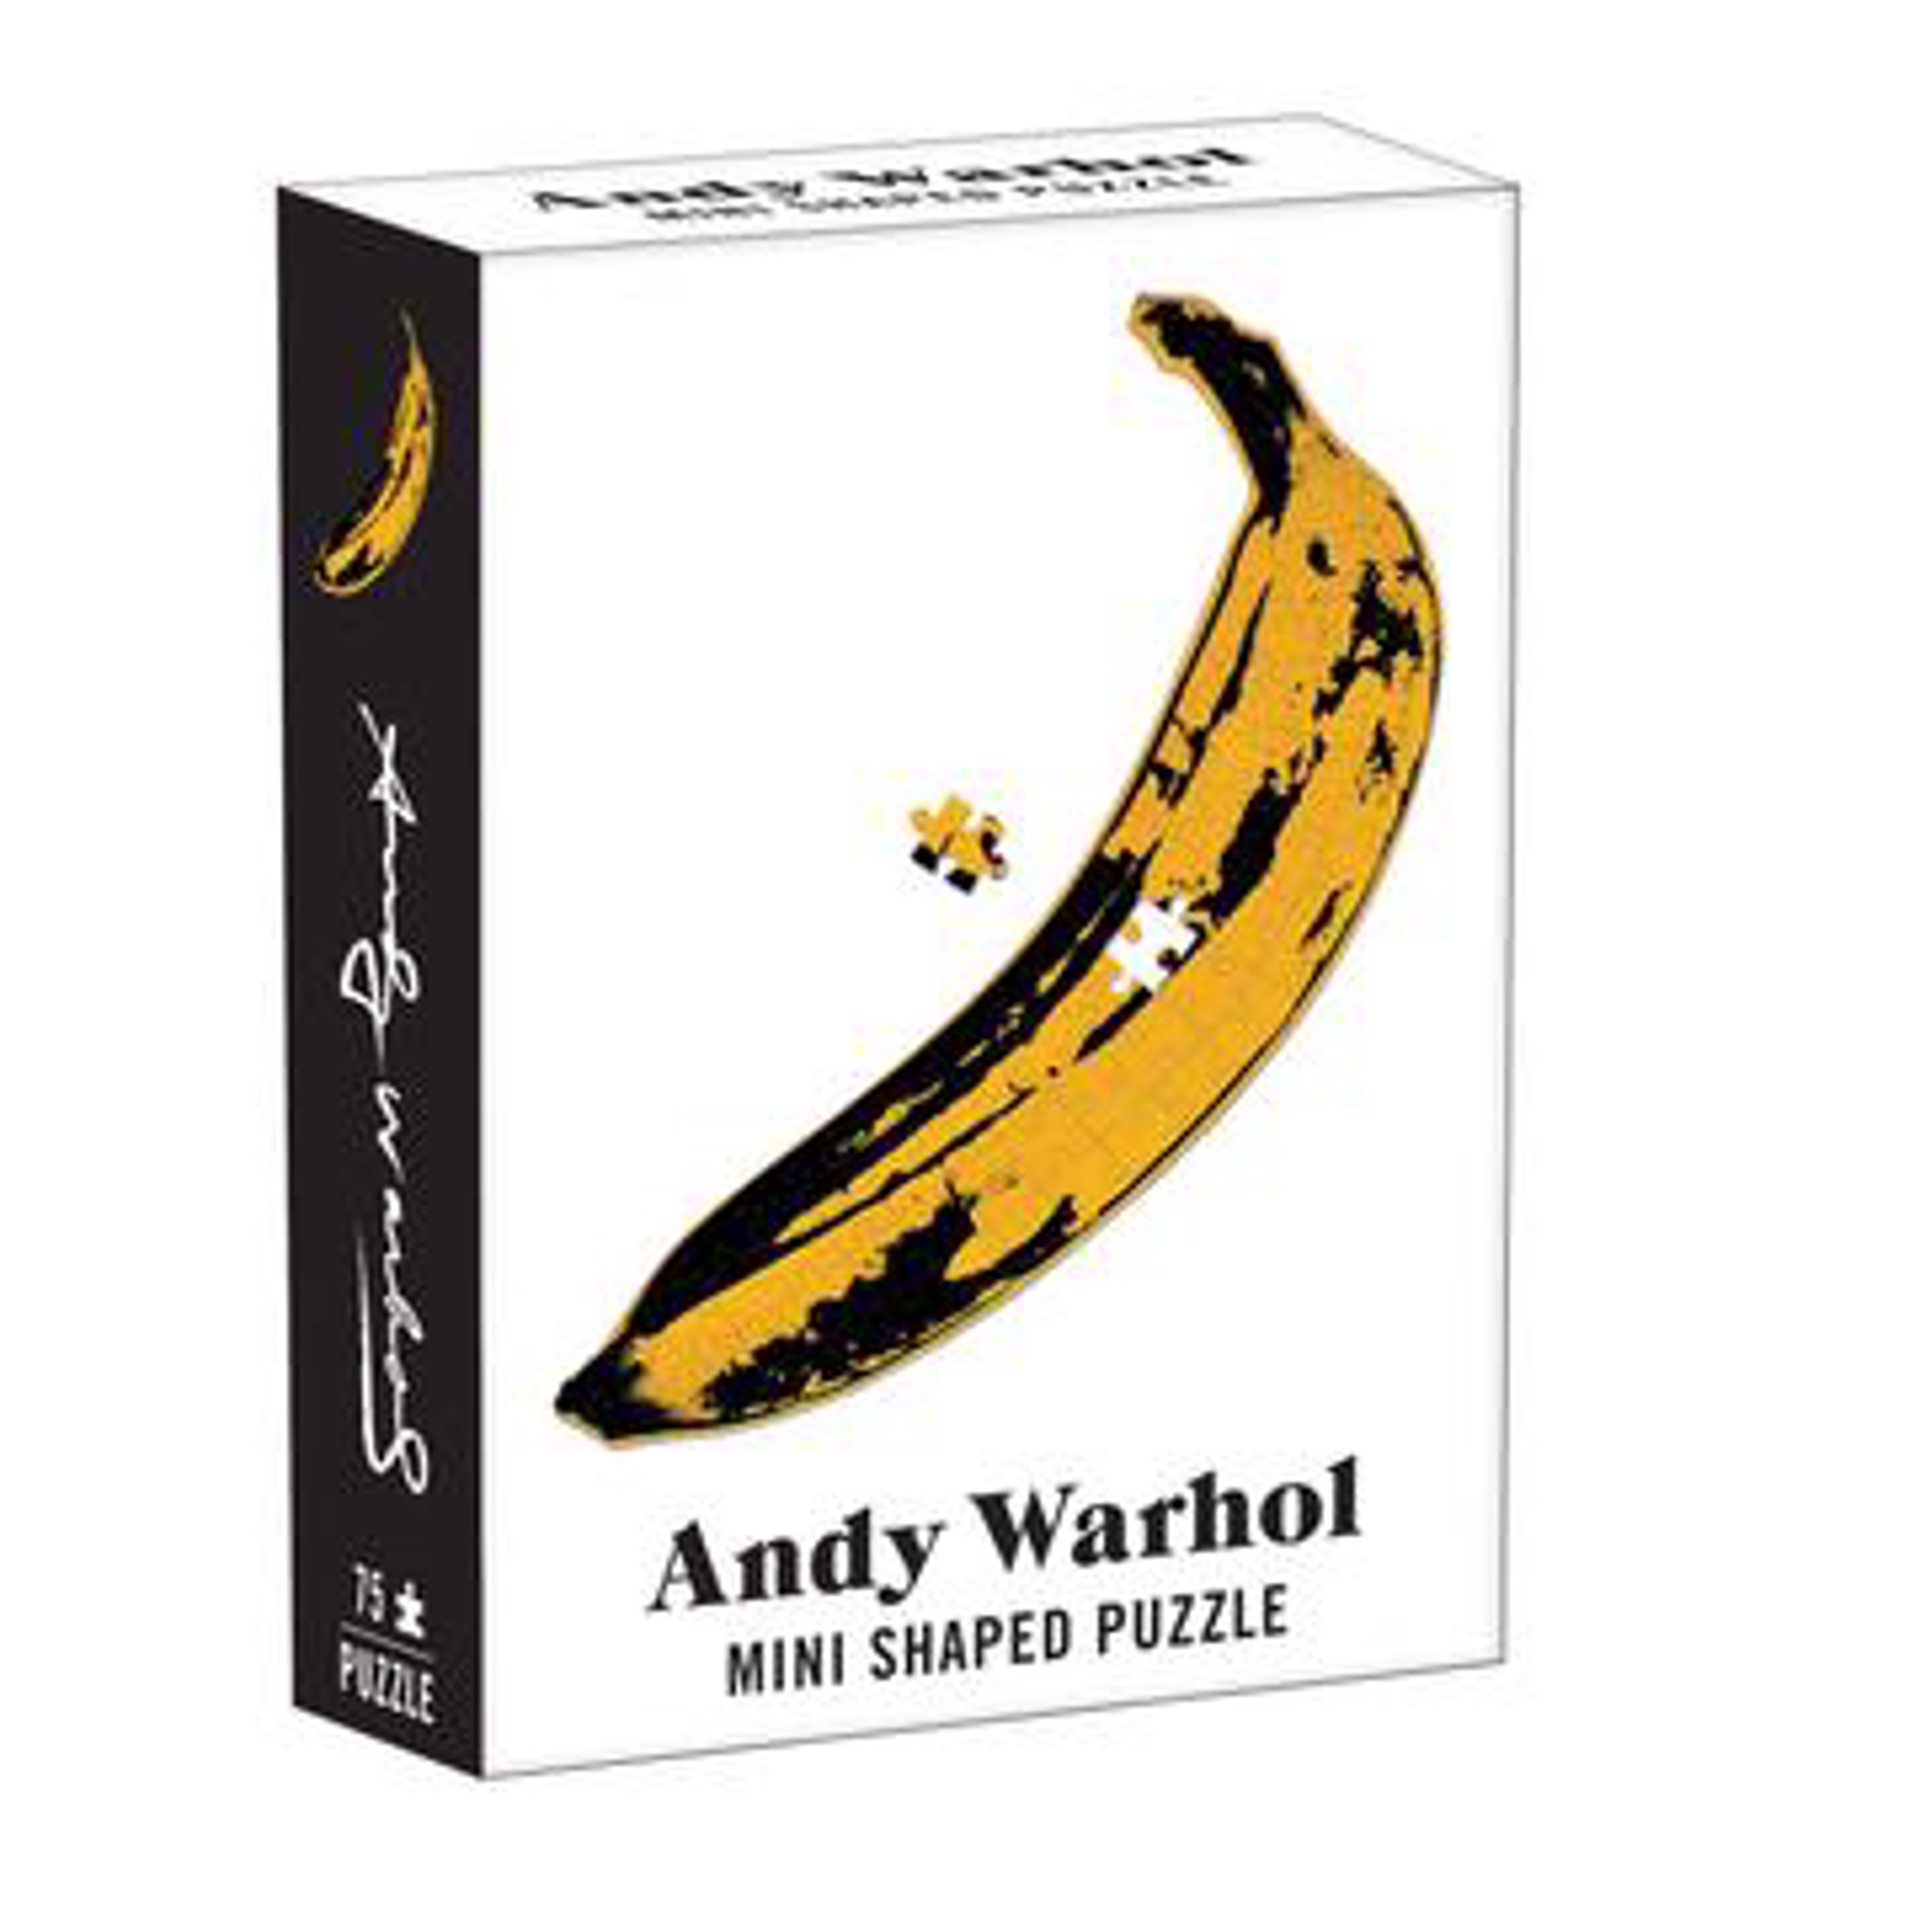 Andy Warhol Mini Shaped Puzzle Banana by Andy Warhol